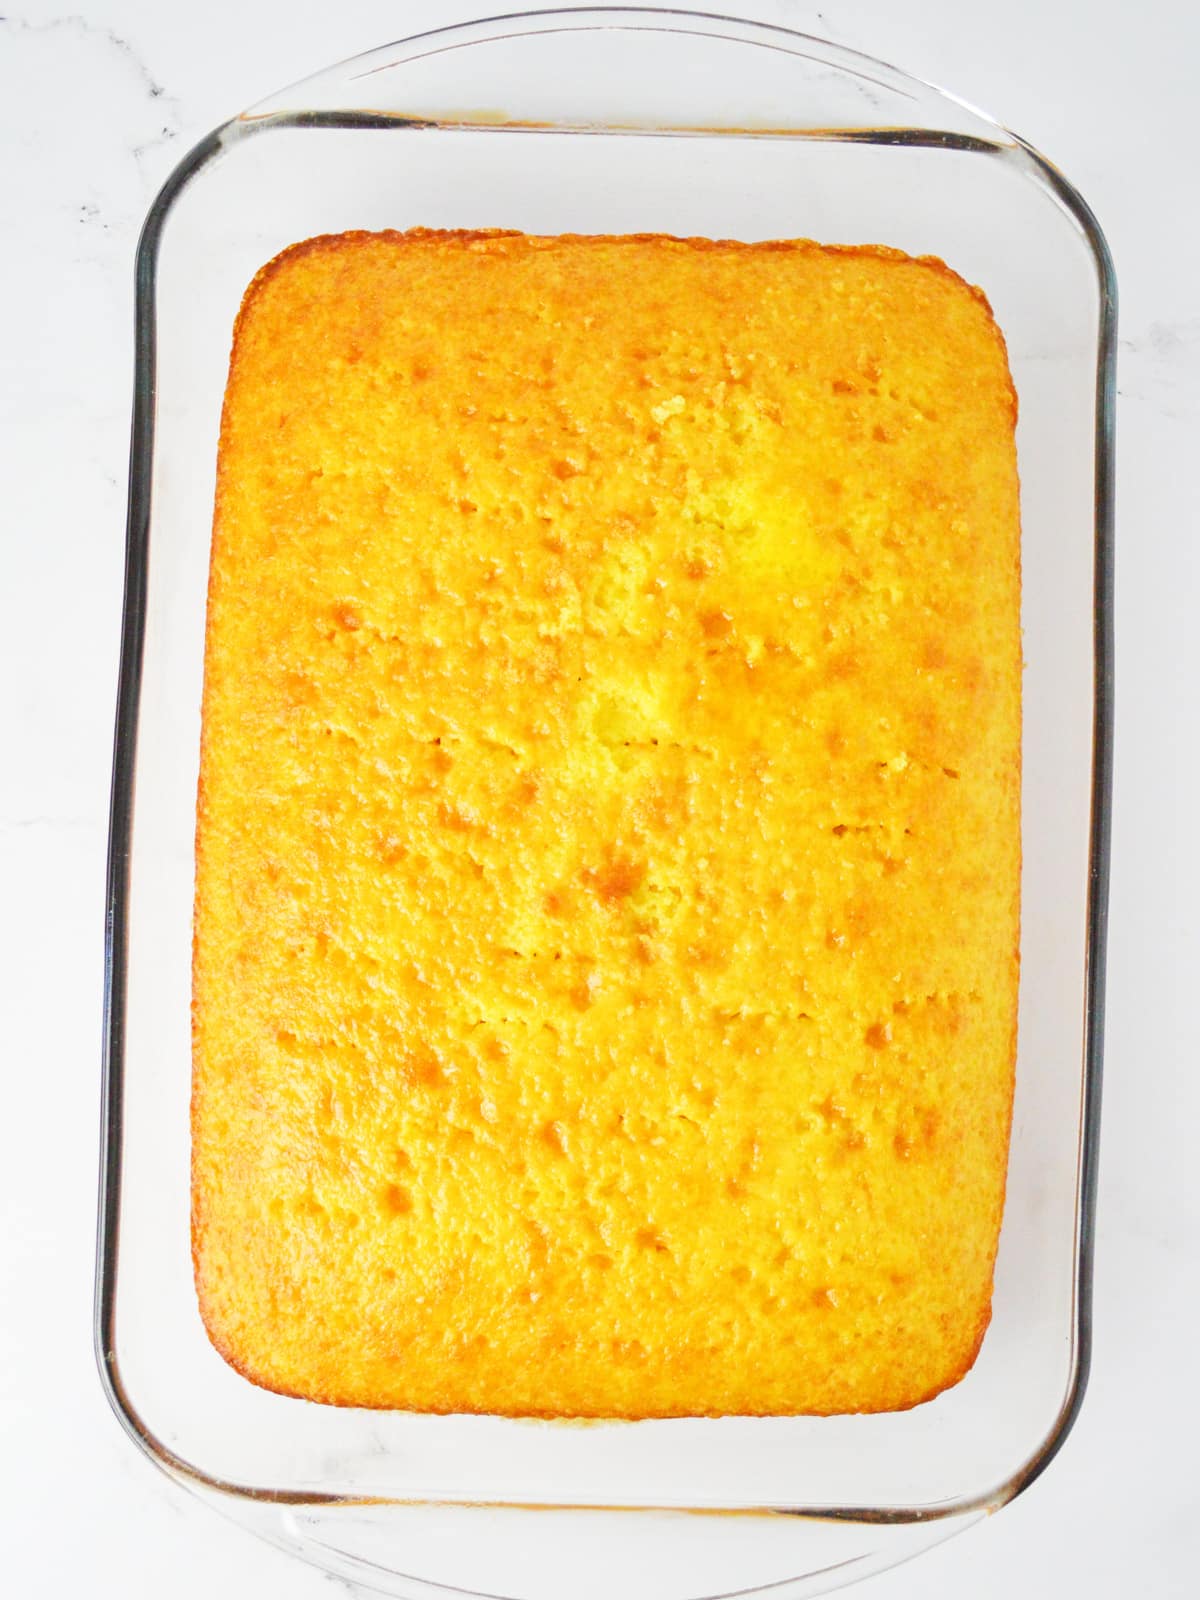 baked Lemon Cake in pan